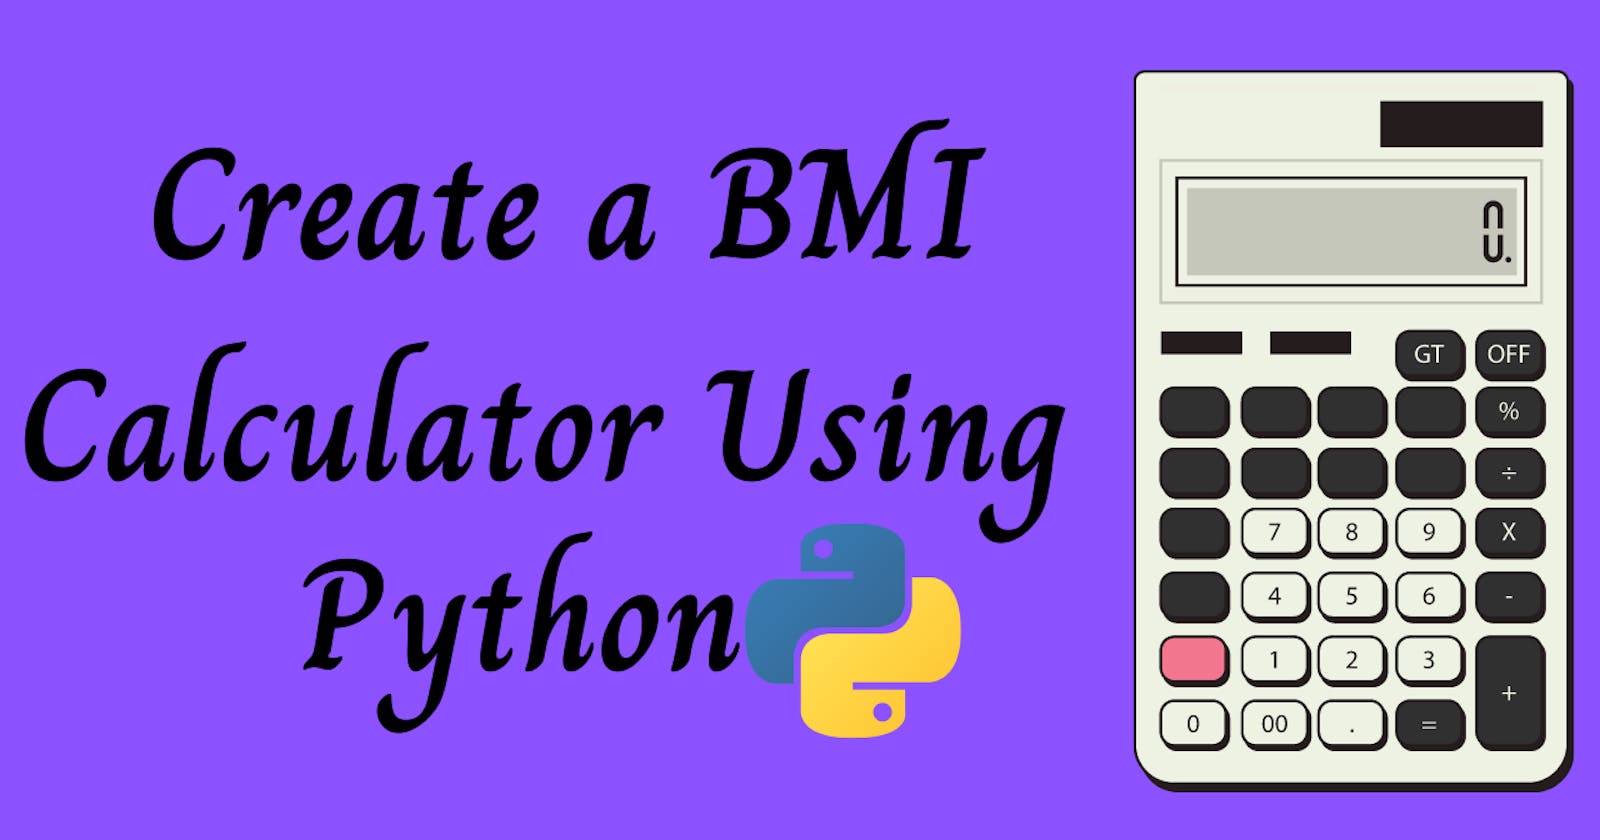 Building a BMI Calculator with Python